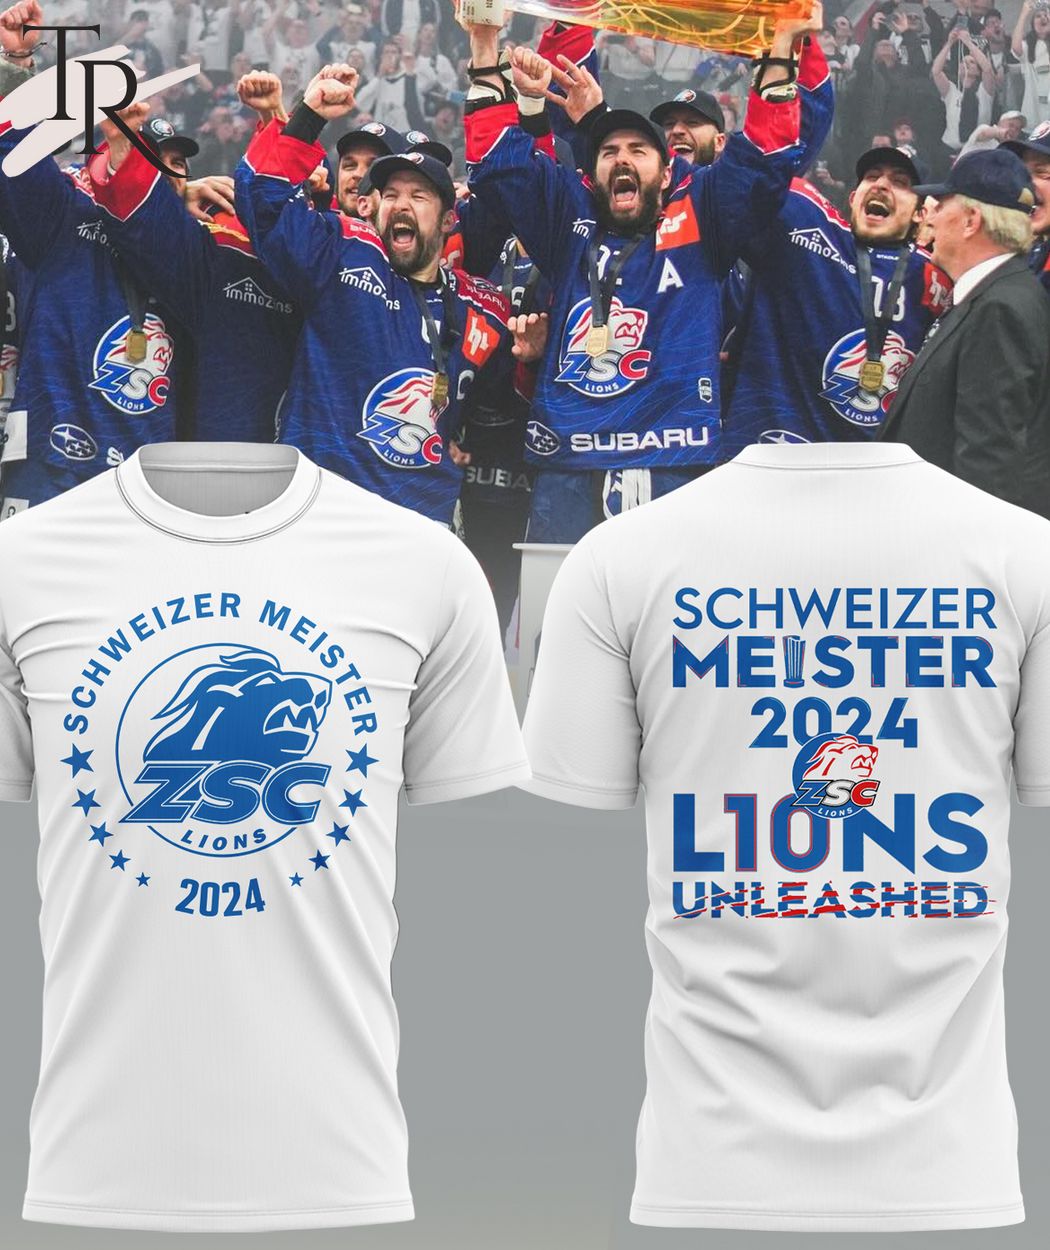 ZSC Lions Schweizer Meister 2024 L10ns Unleashed T-Shirt